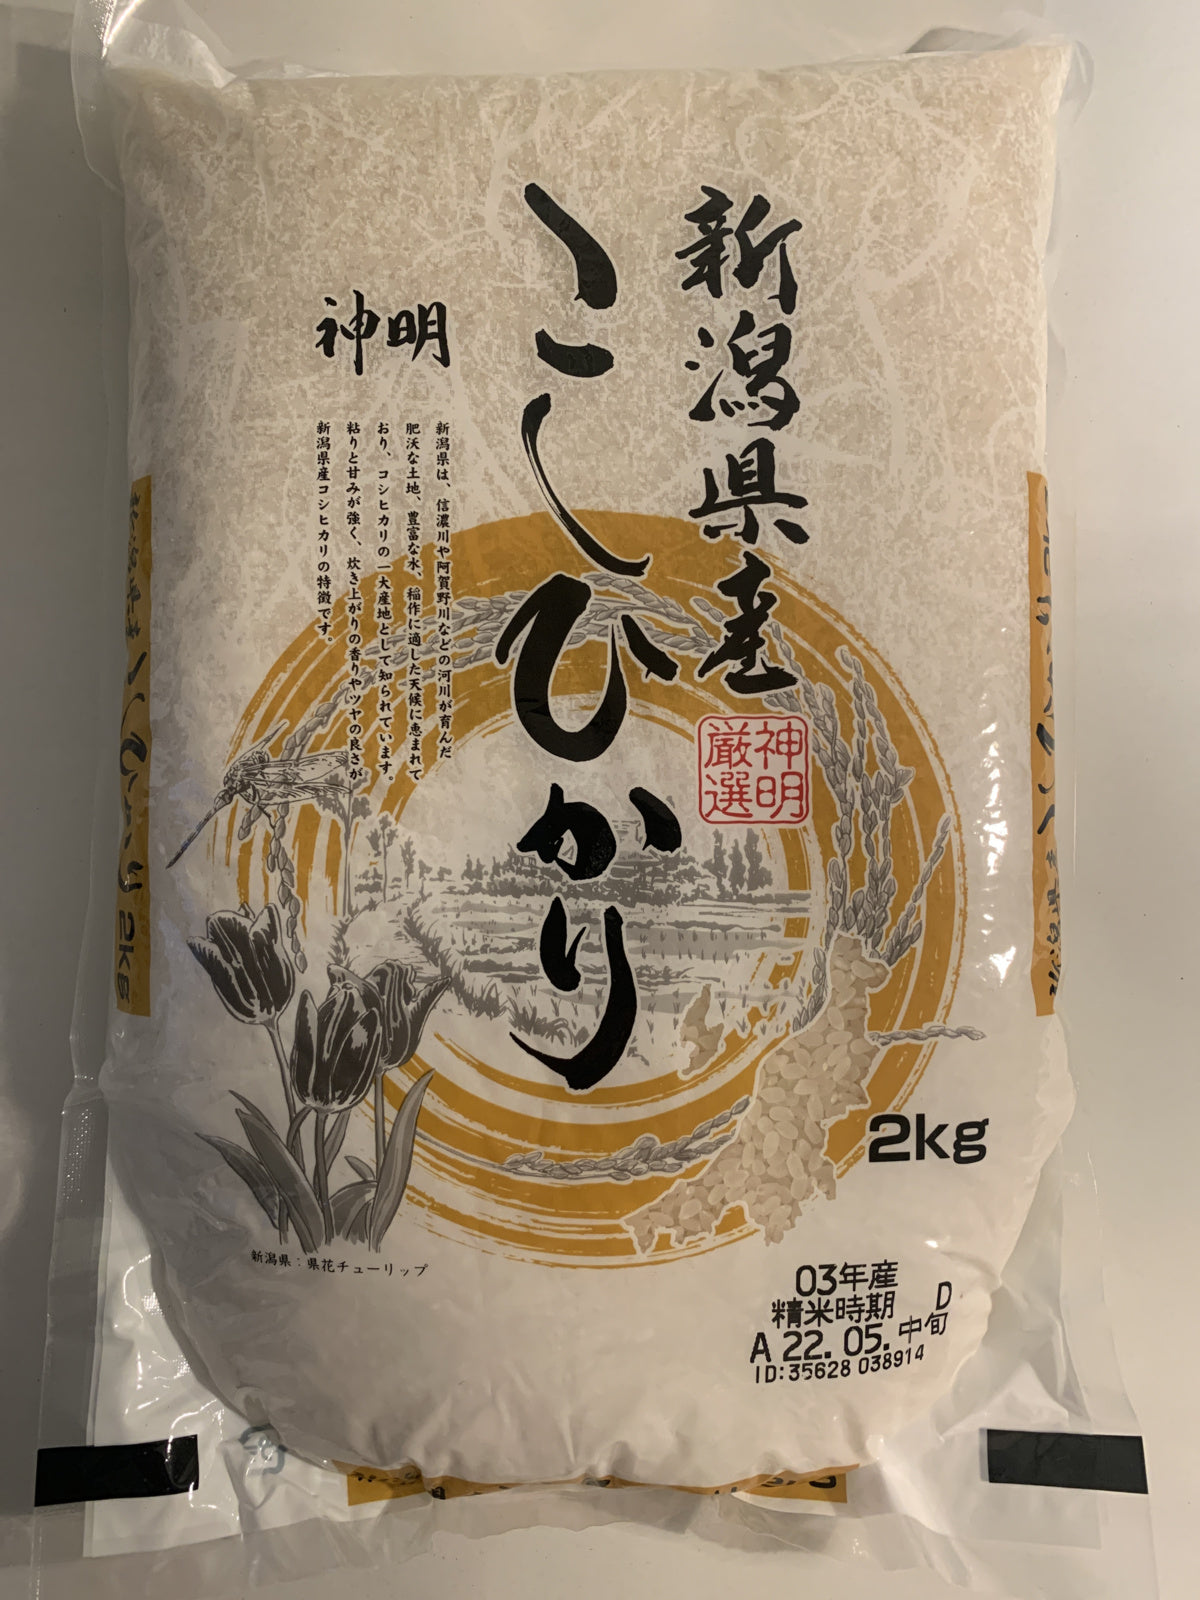 Akafuji Niigata-Ken San Koshihikari Rice 2kg